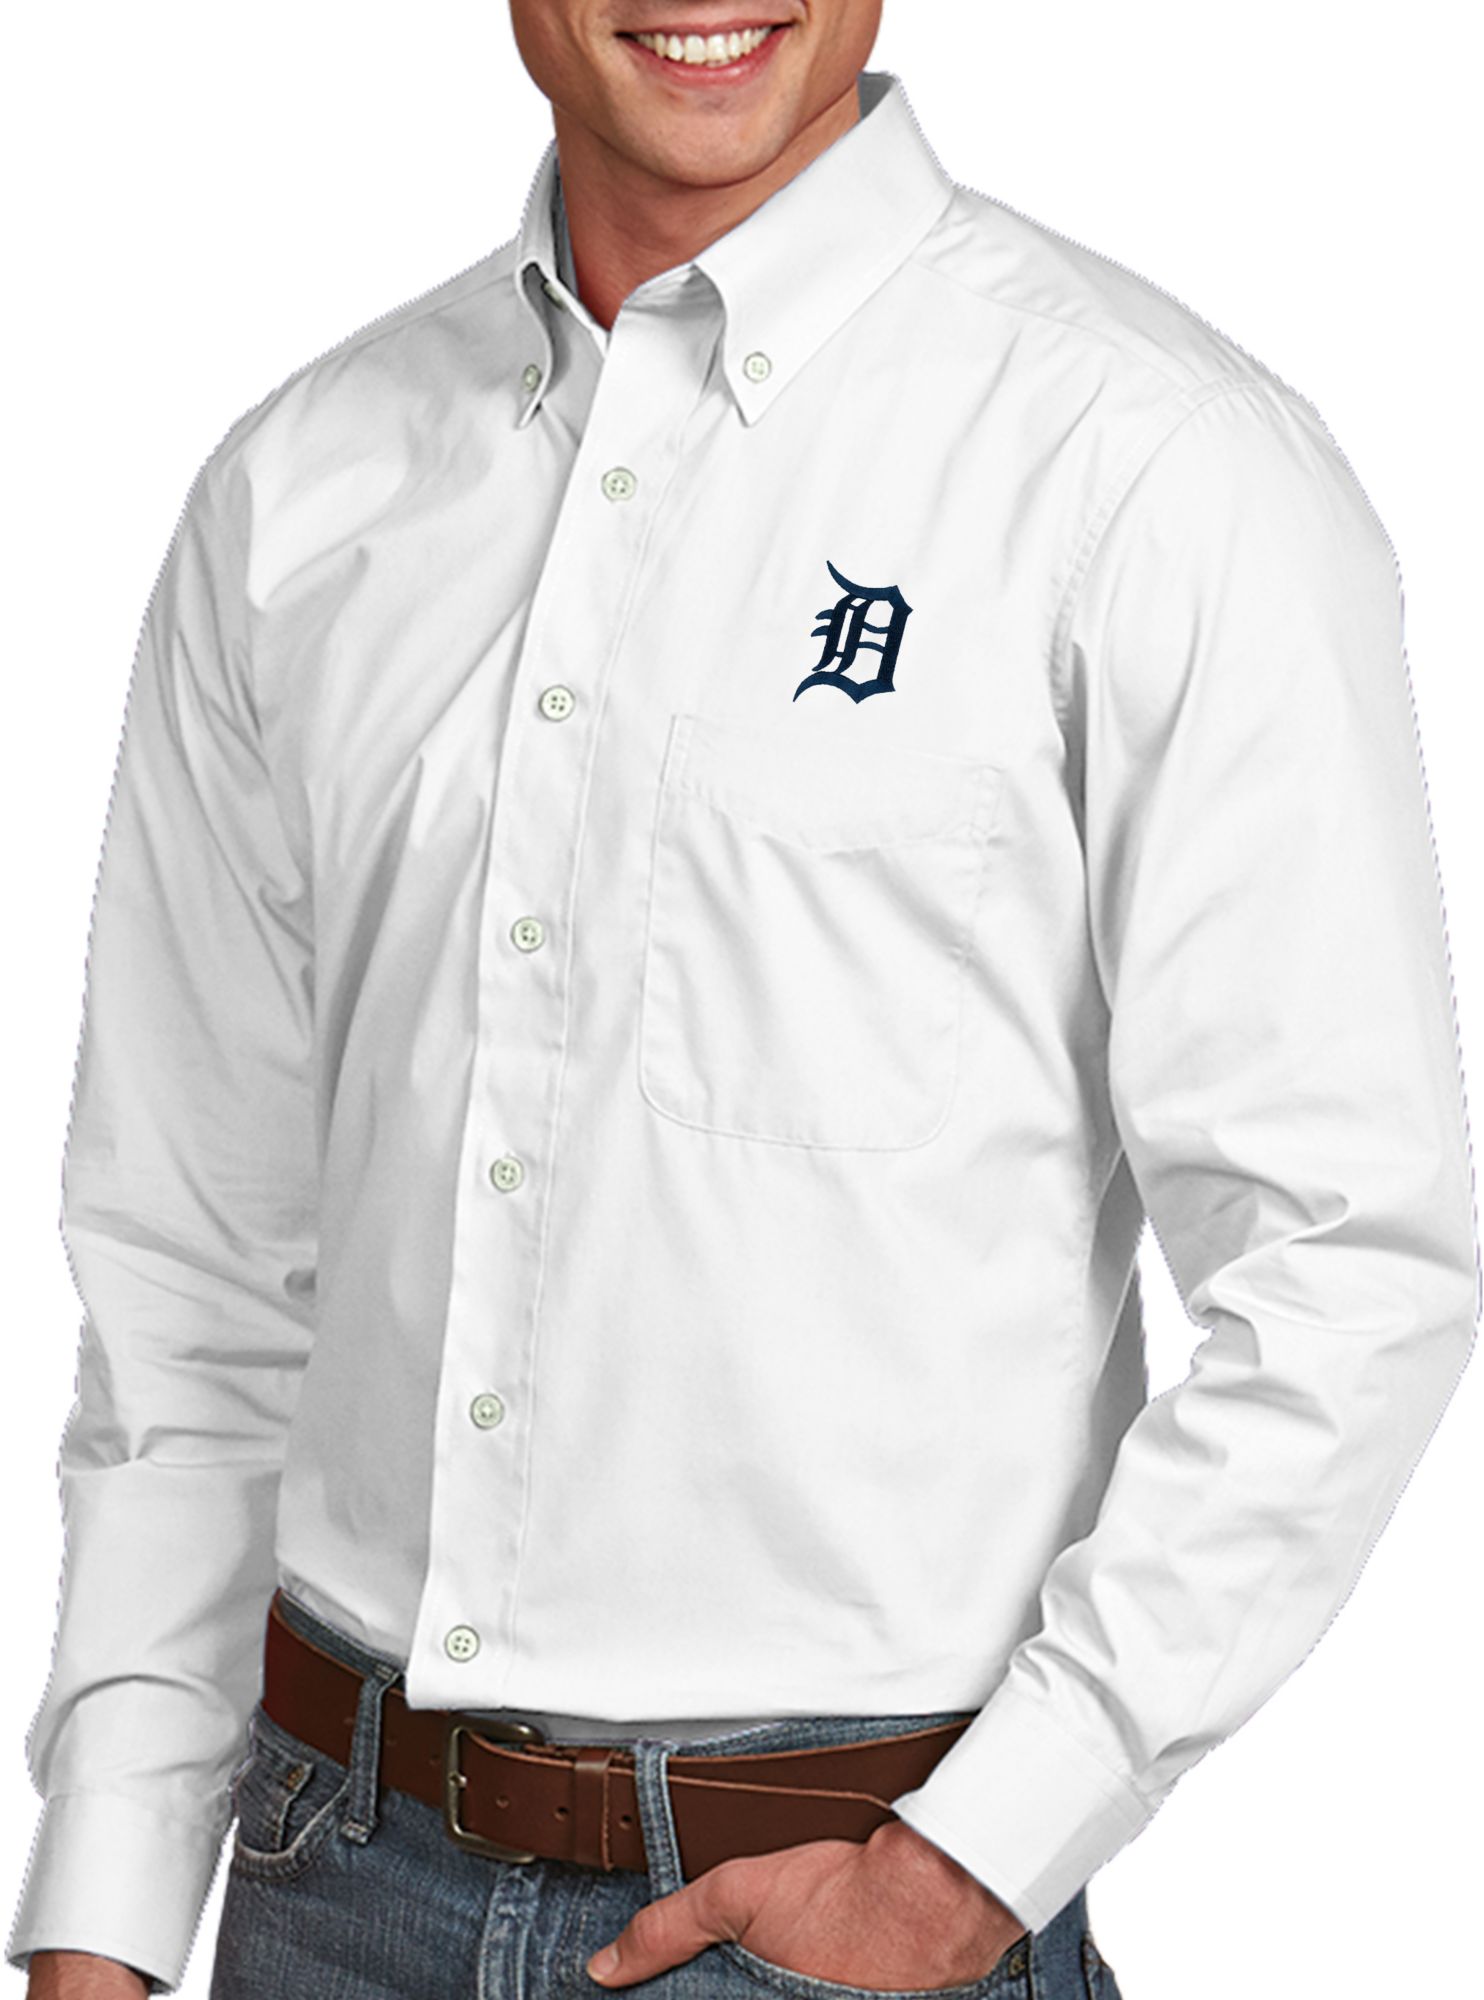 detroit tigers button up shirt